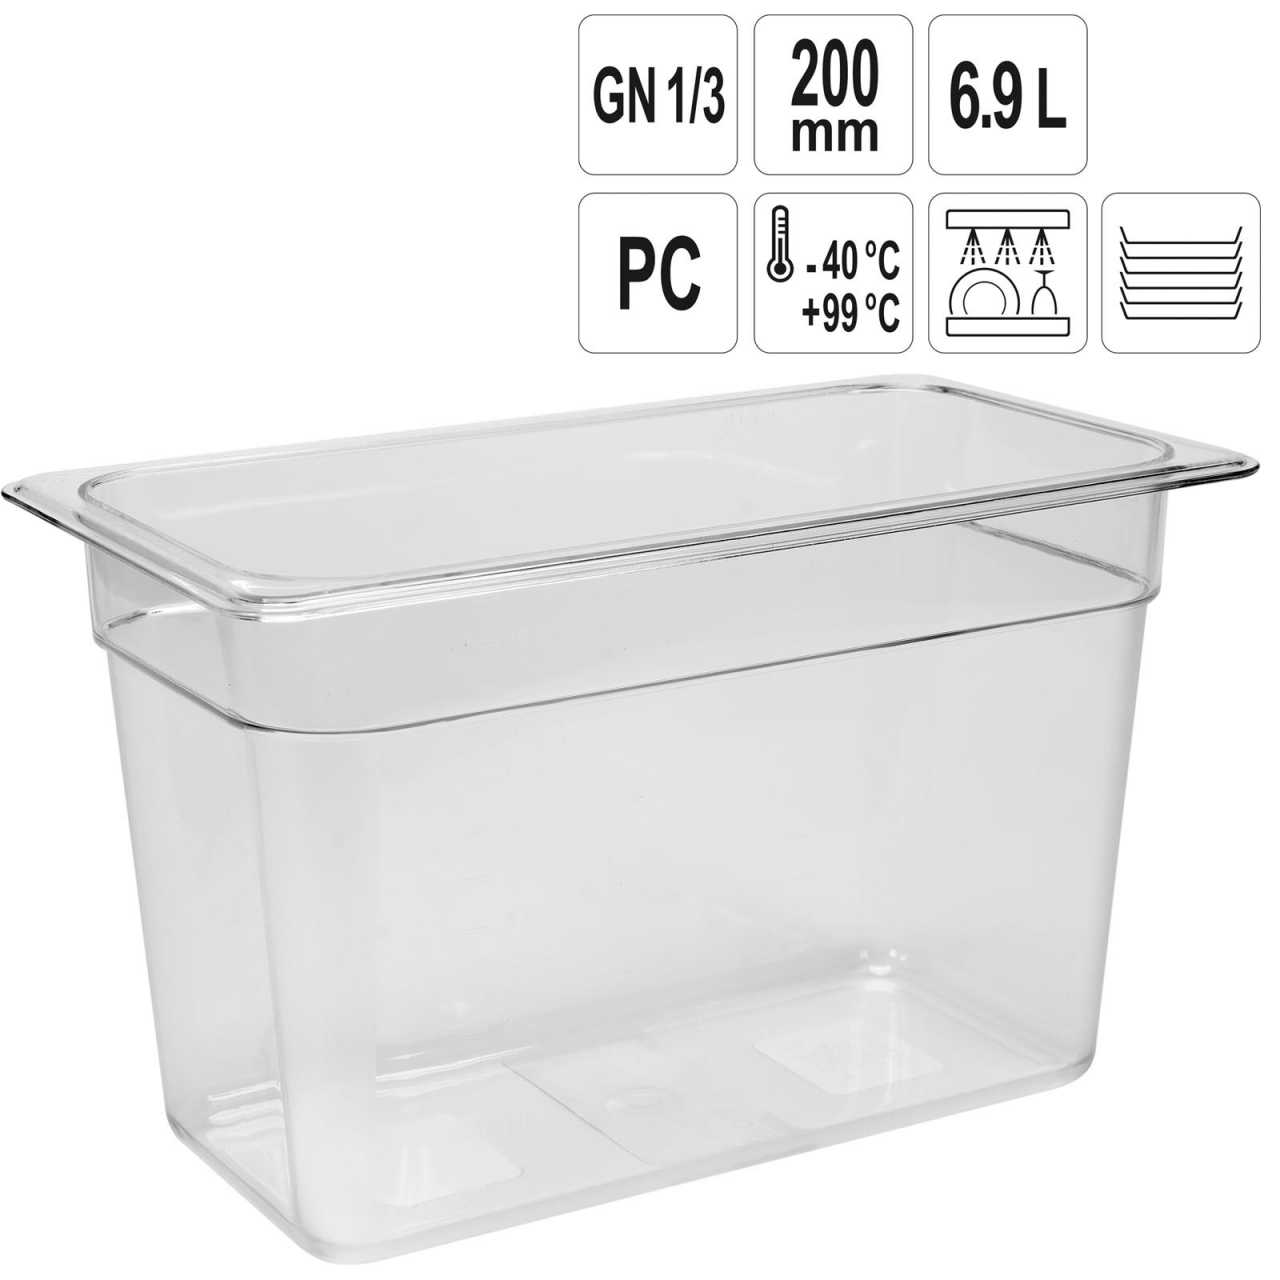 YATO Profi GN Gastronorm Behälter Kunststoff 1/3 200mm YG-00413